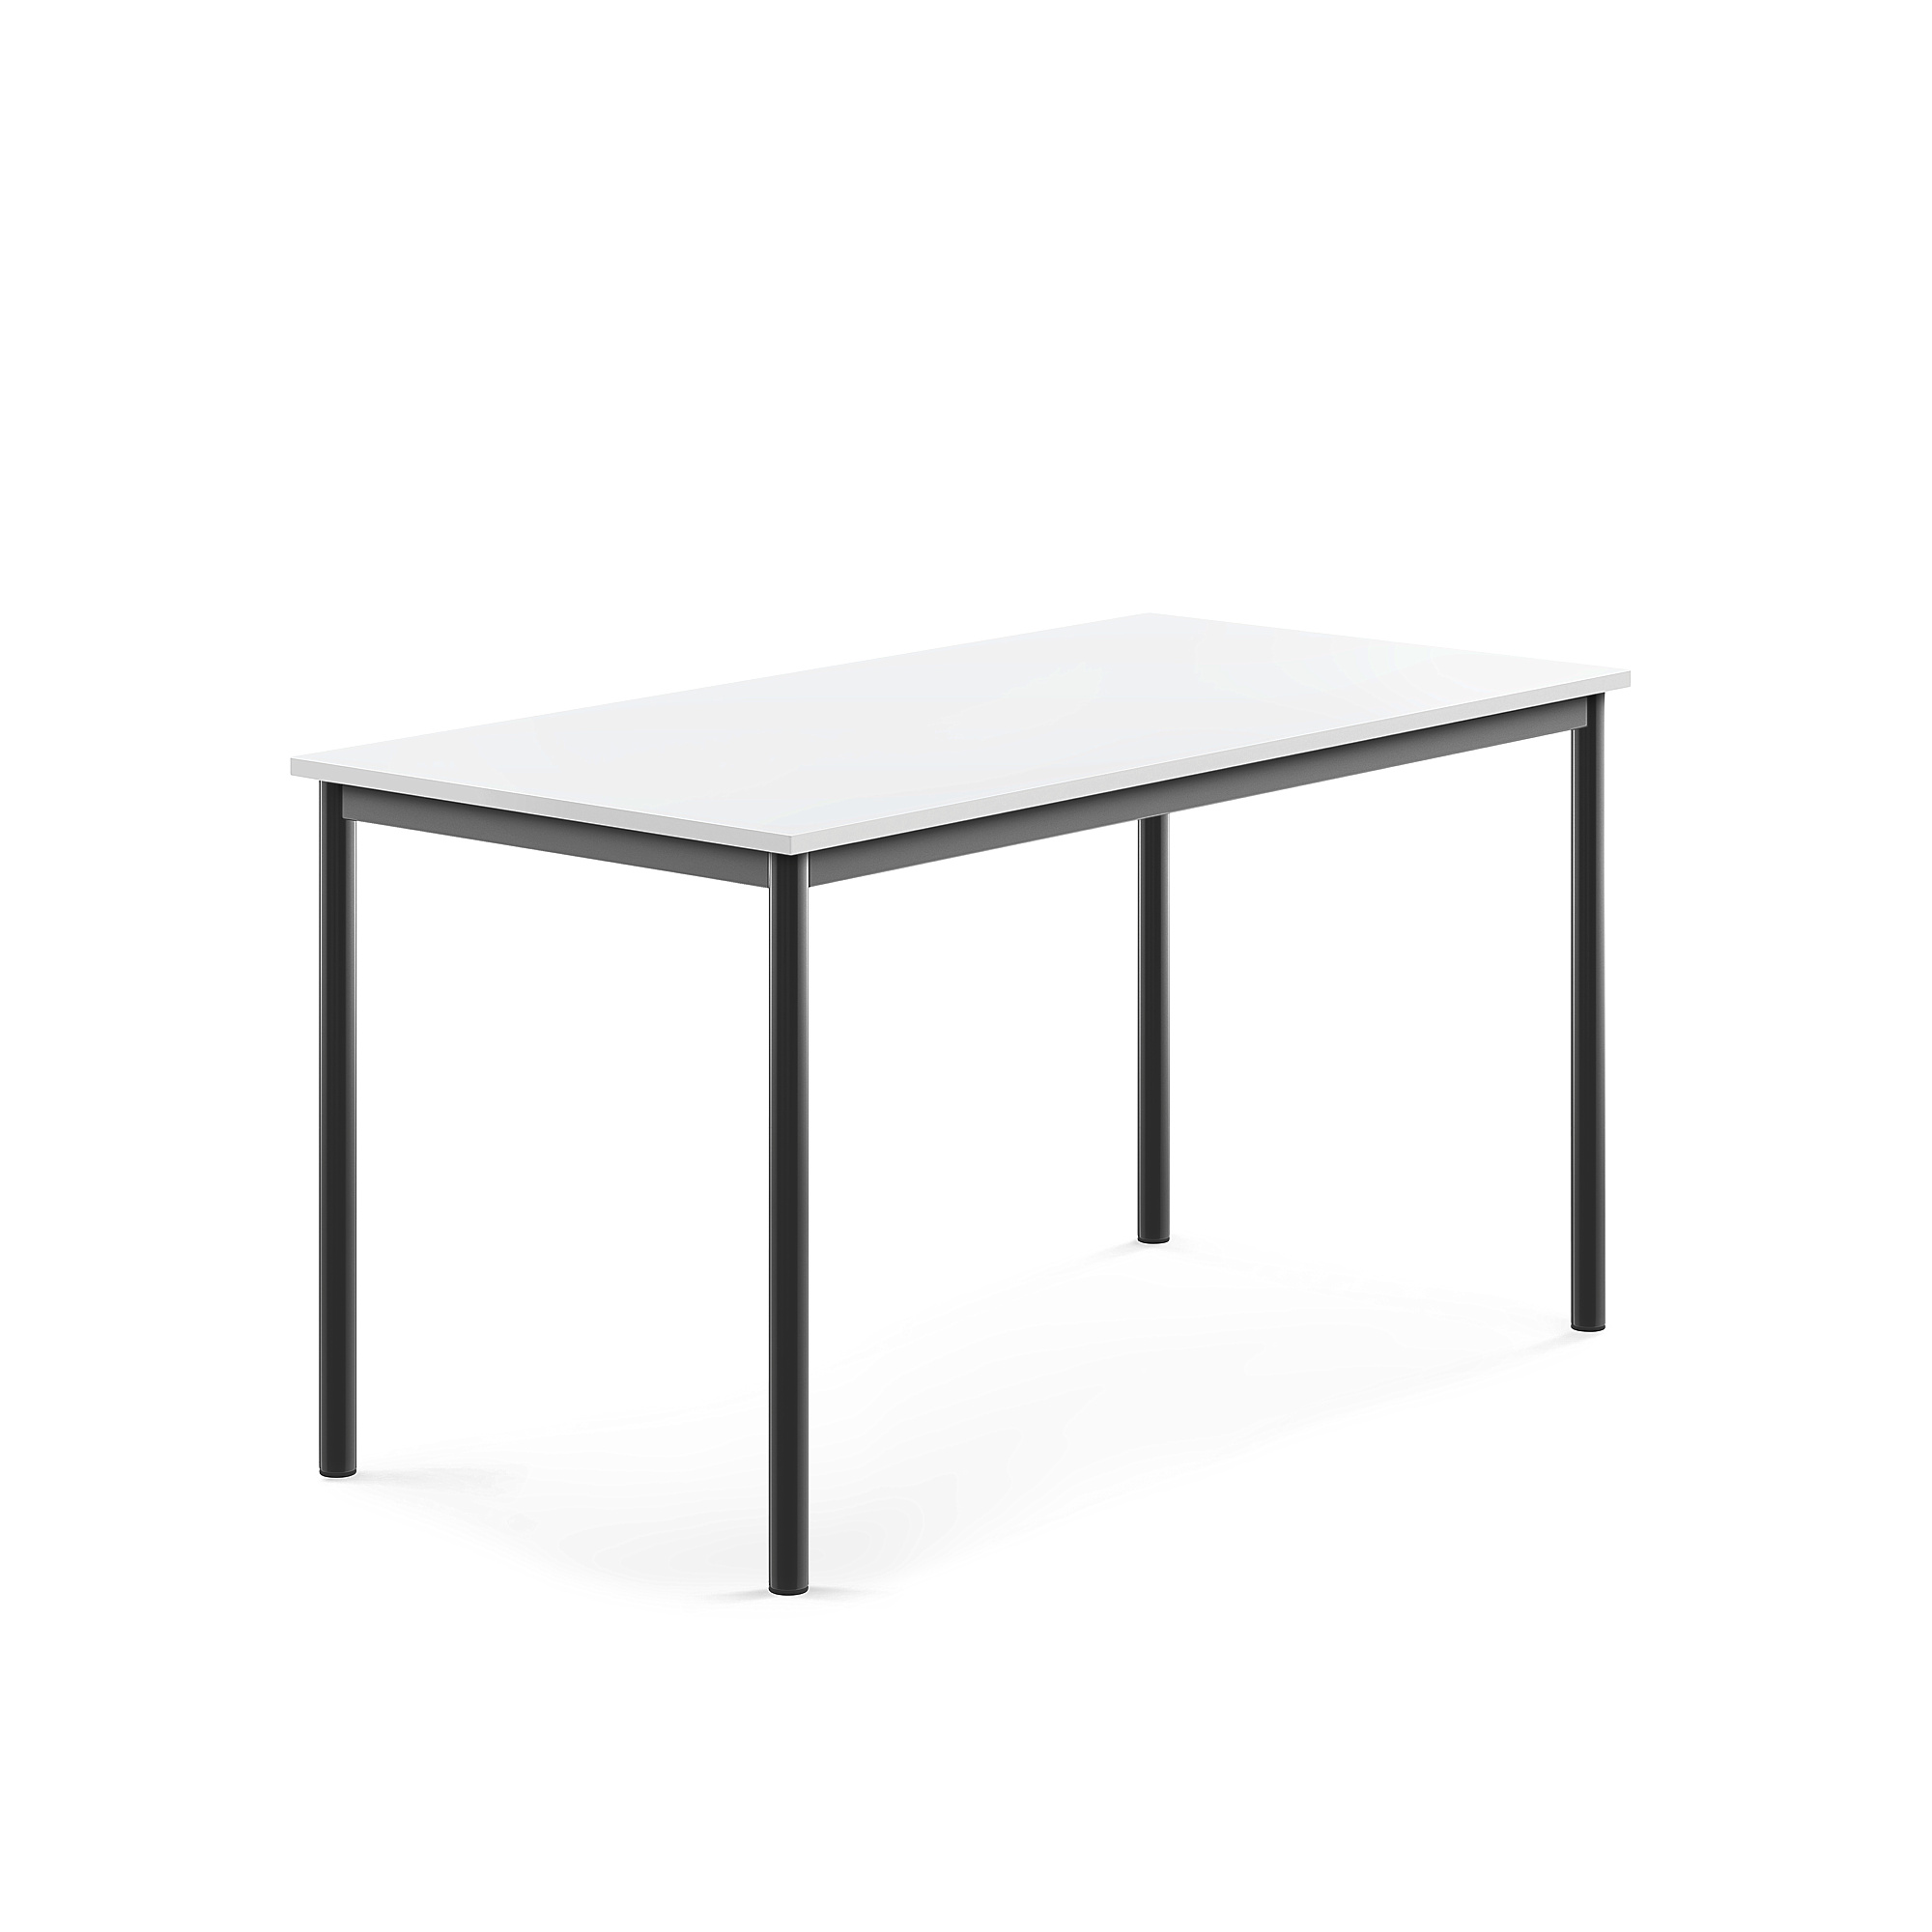 Stůl BORÅS, 1400x700x720 mm, antracitově šedé nohy, HPL deska, bílá